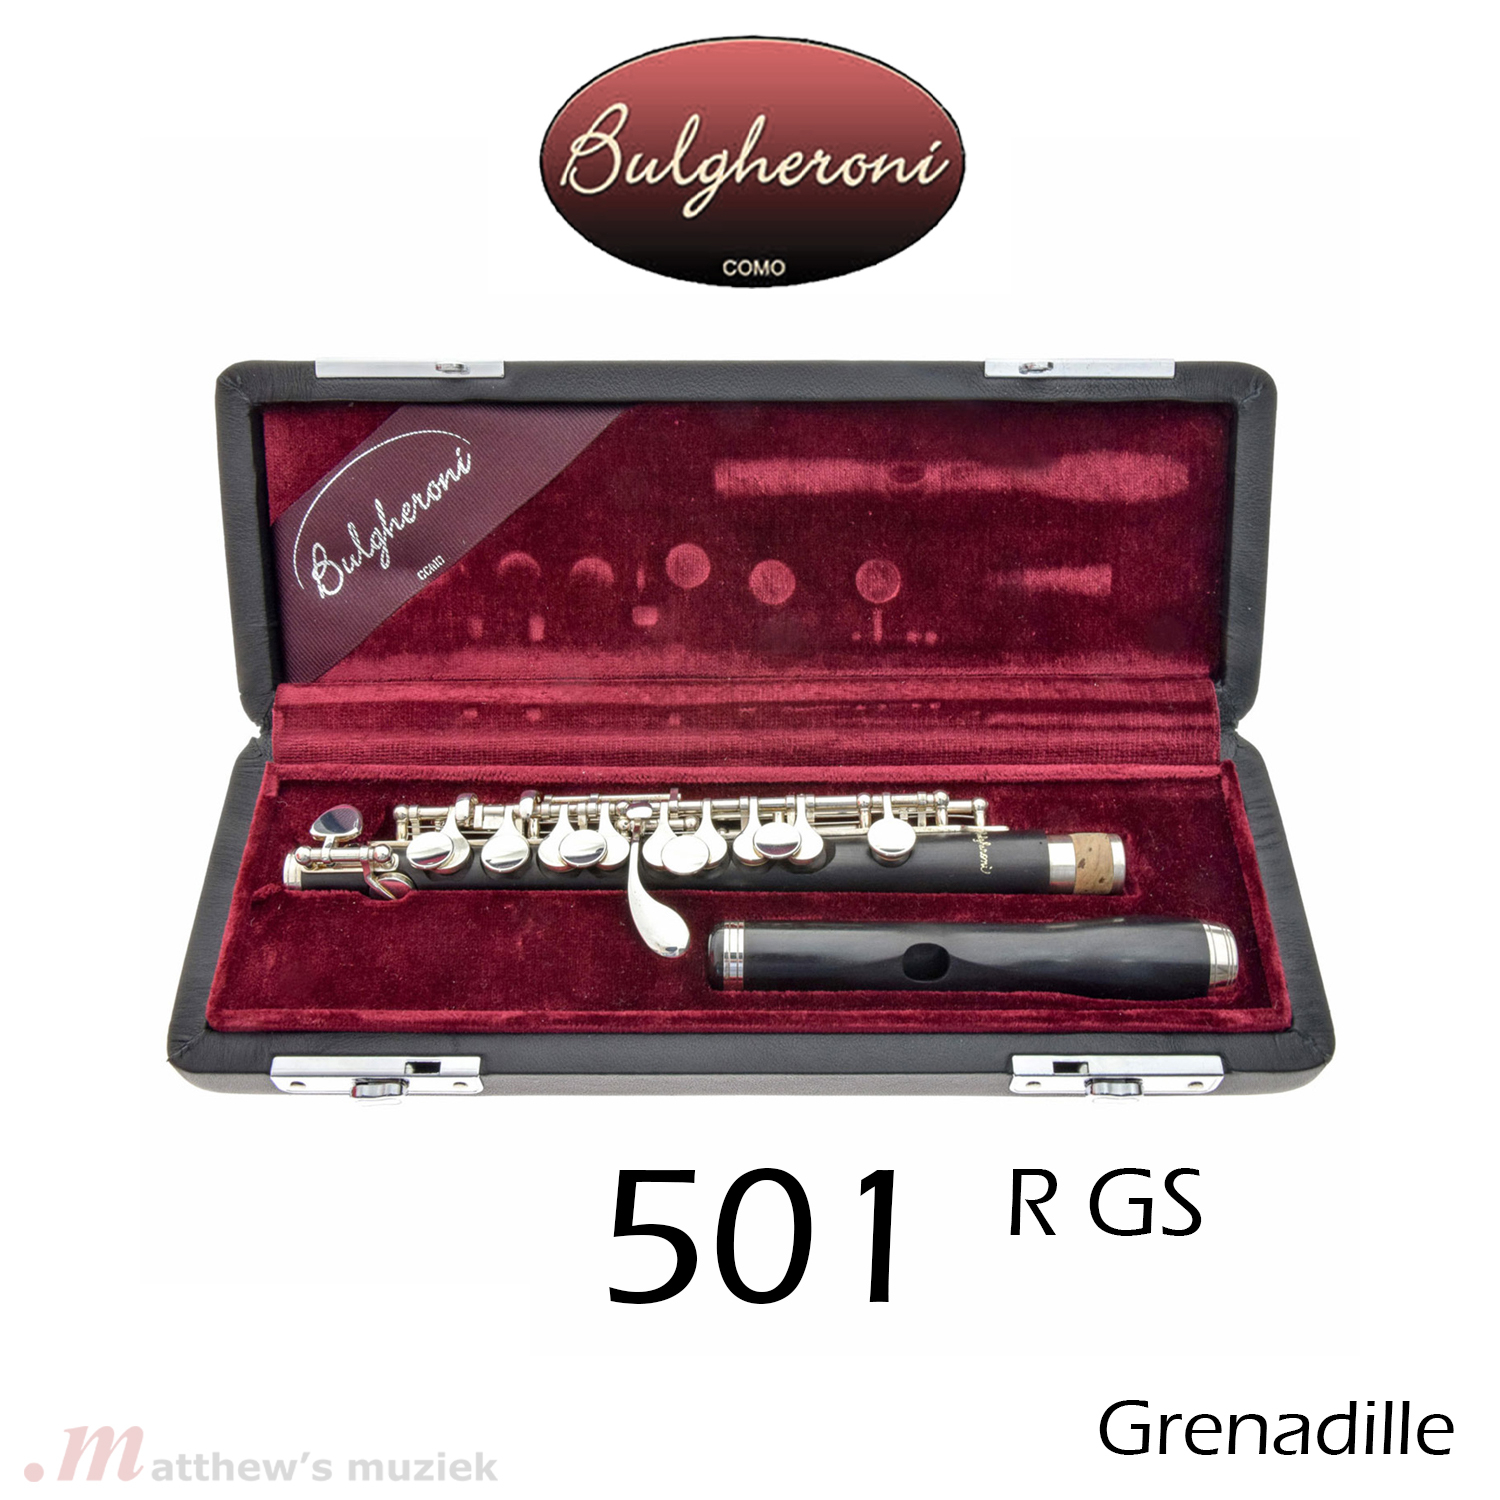 Bulgheroni Piccoloflöte - 501 R GS Grenadill